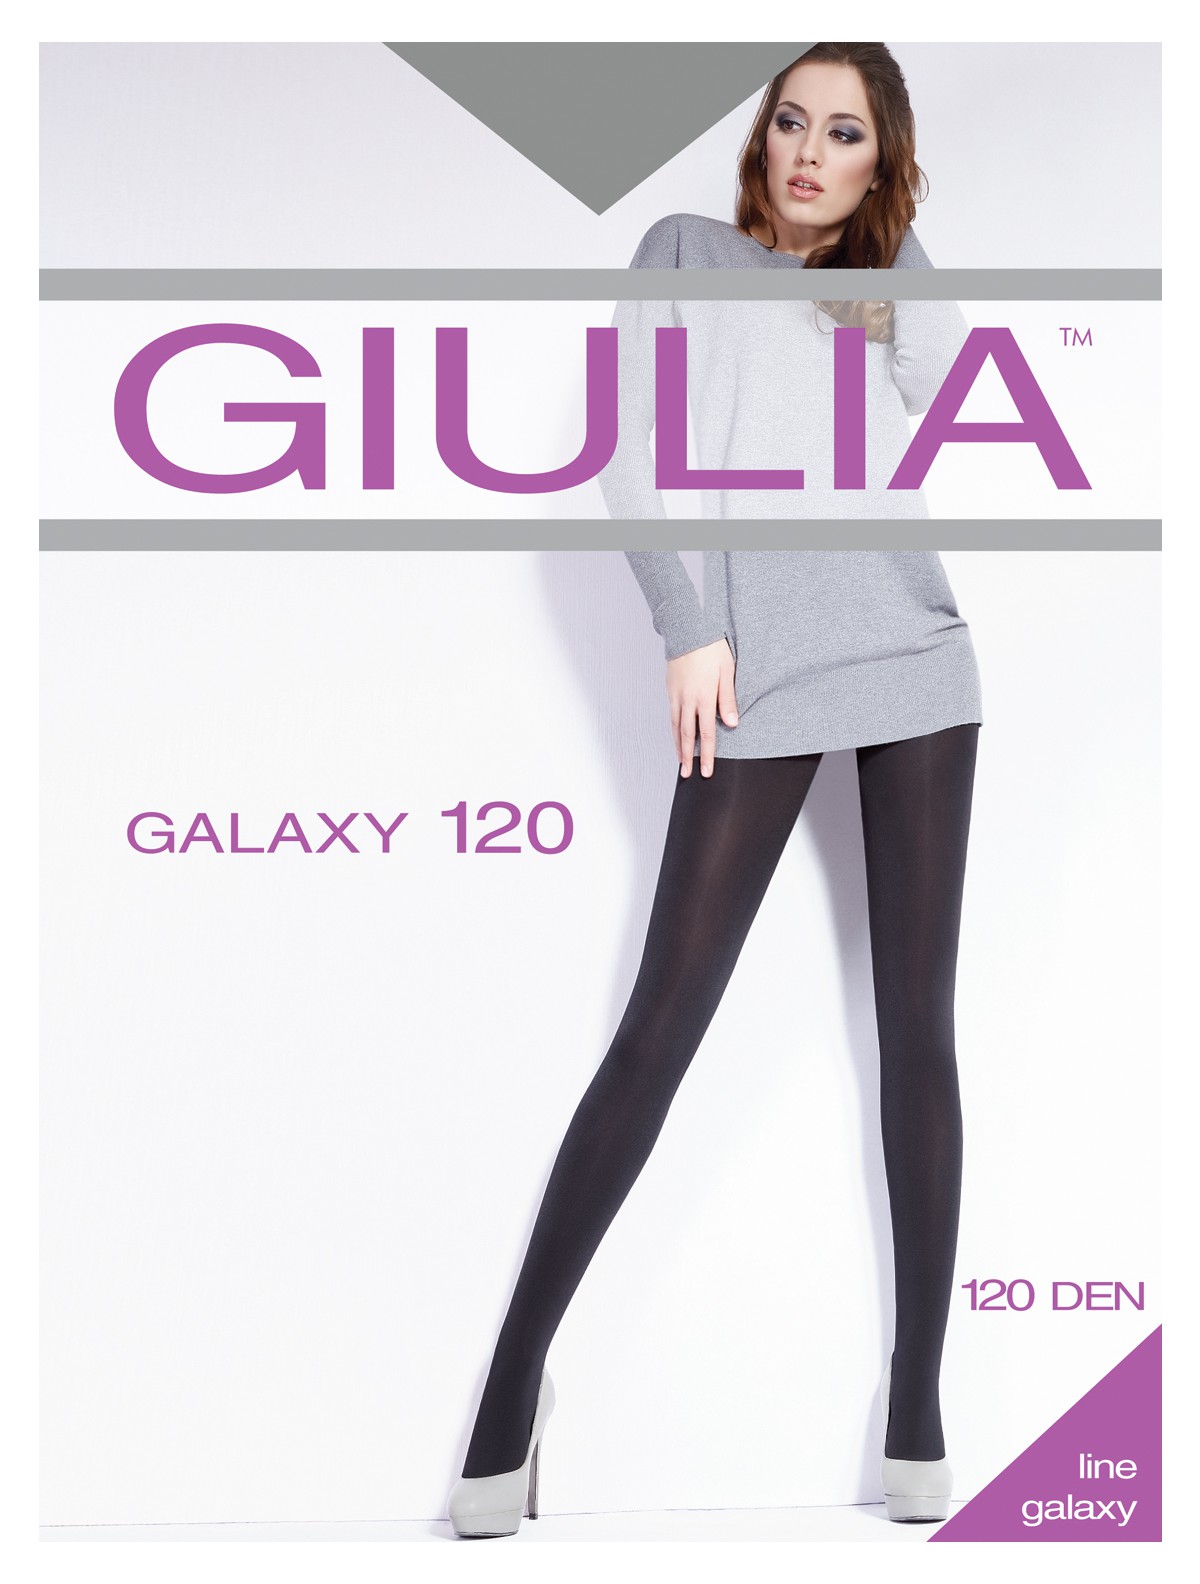 Giulia Galaxy 120 3D Opaque Tights